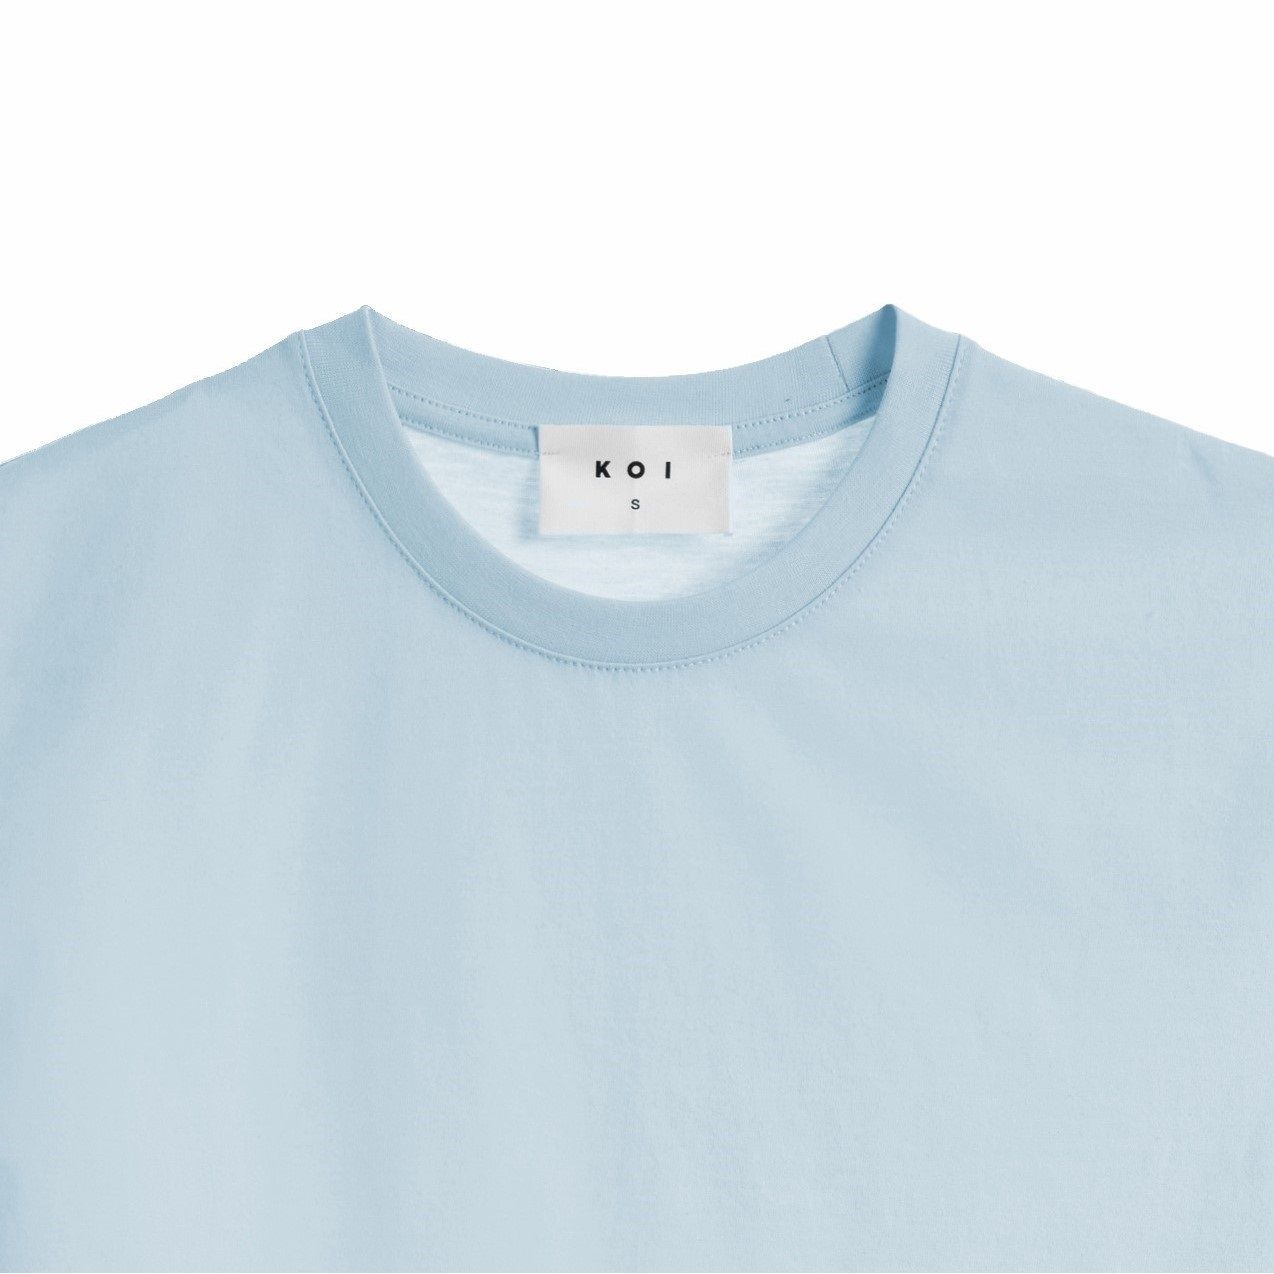 تی شرت آستین کوتاه زنانه کوی مدل رگولار هی گرل کد 444 رنگ آبی -  - 2